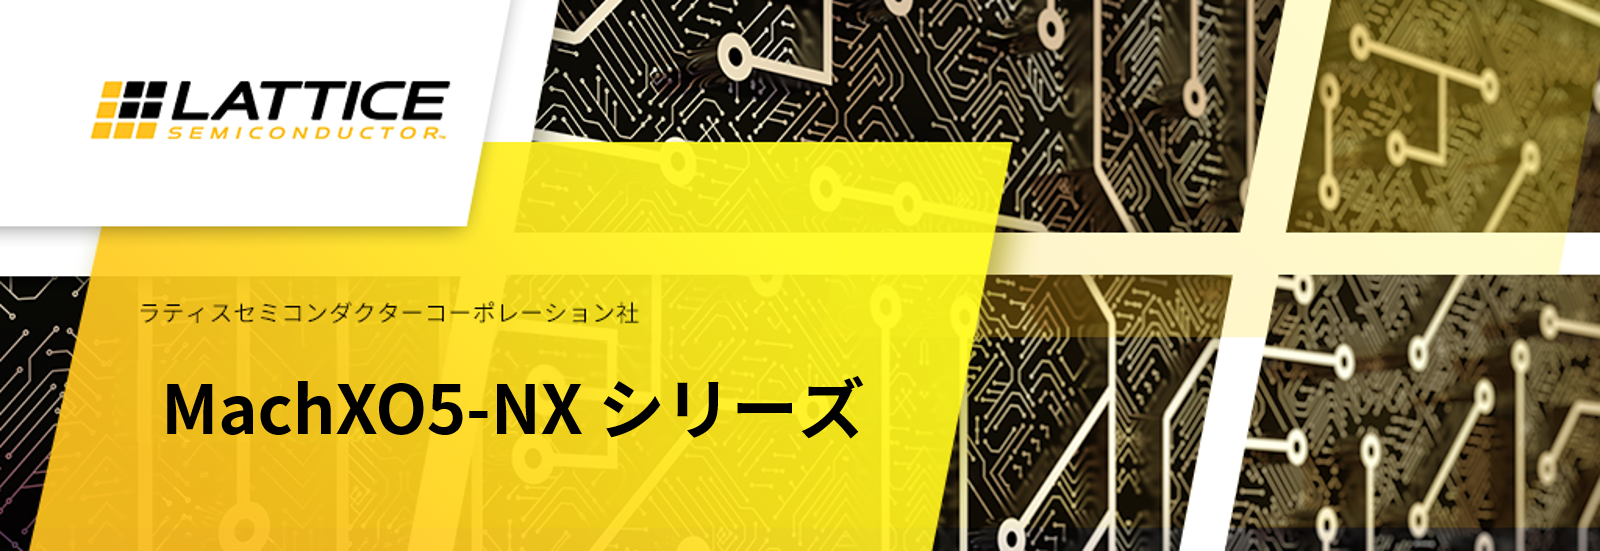 MachXO5-NX シリーズ